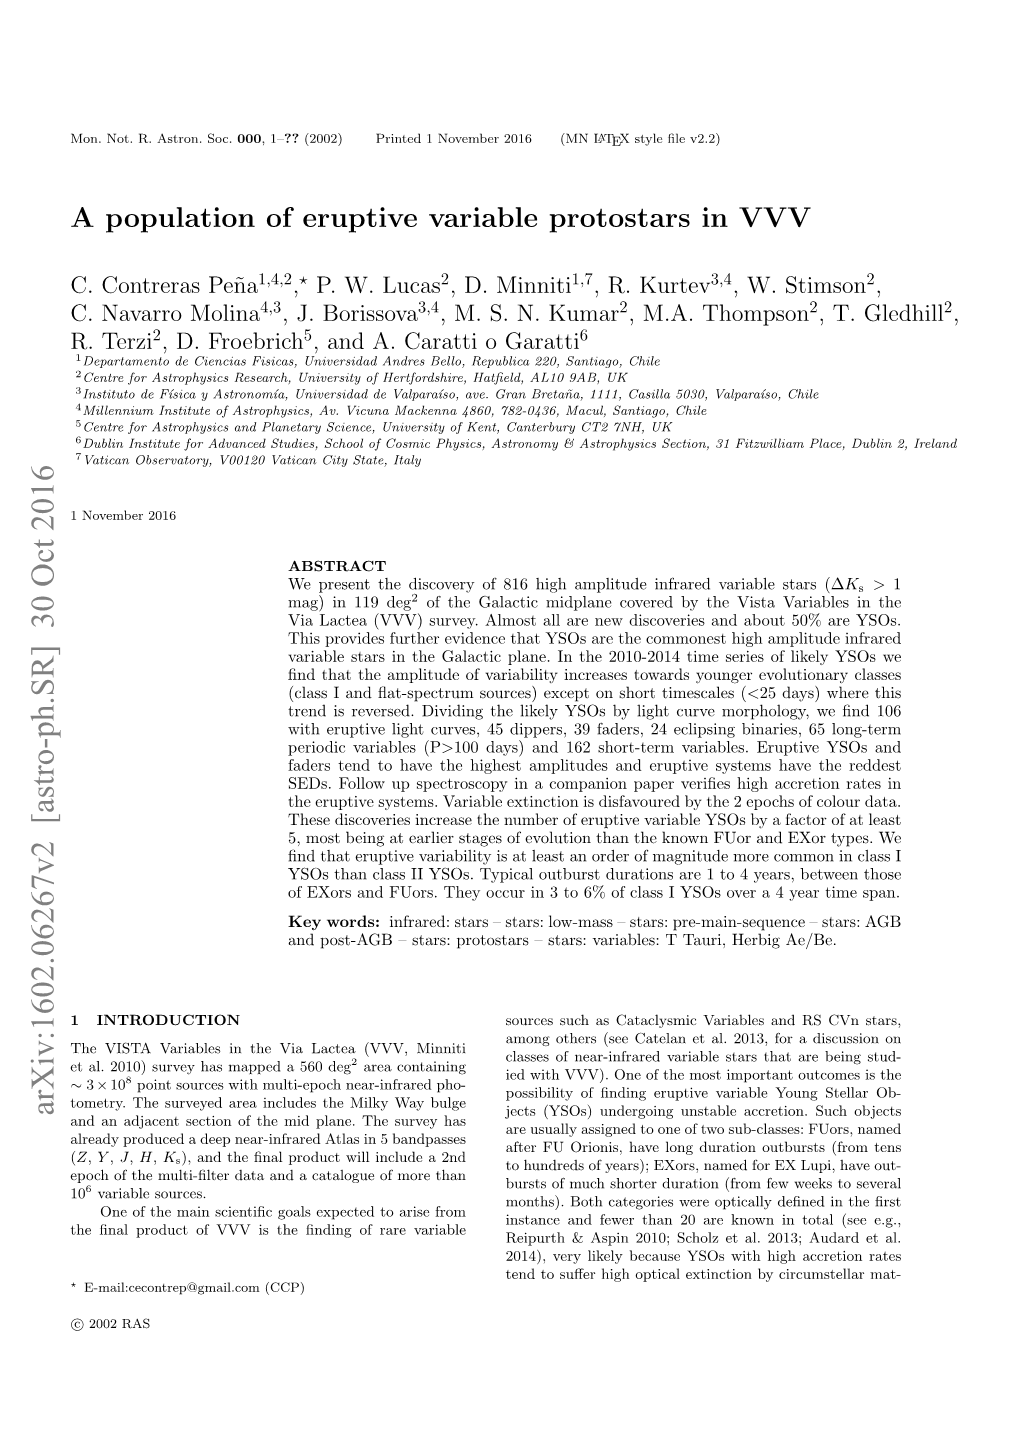 A Population of Eruptive Variable Protostars in VVV